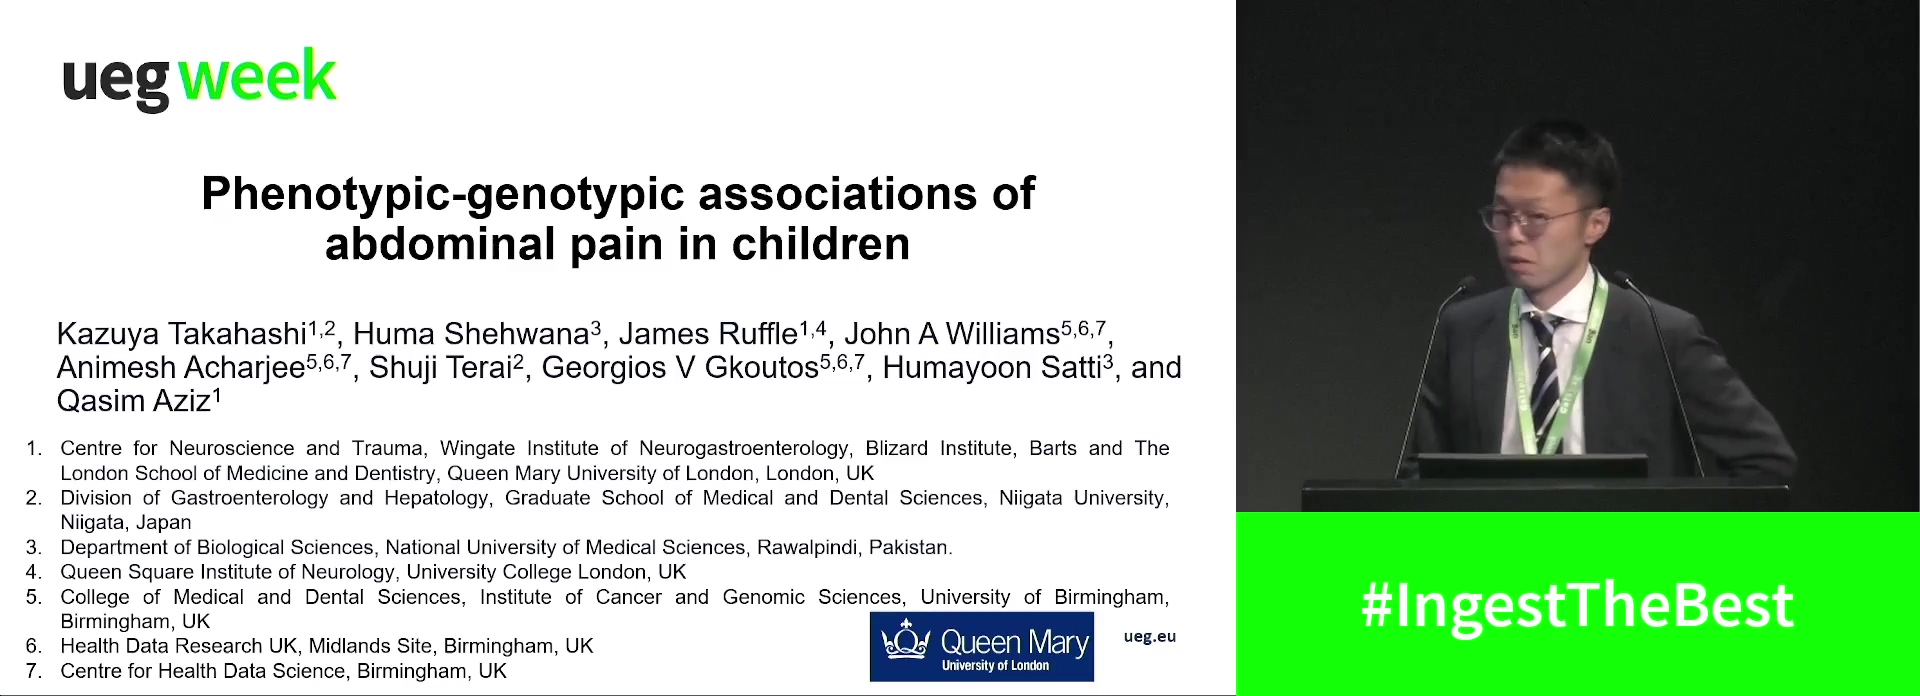 PHENOTYPIC-GENOTYPIC ASSOCIATIONS OF ABDOMINAL PAIN IN CHILDREN